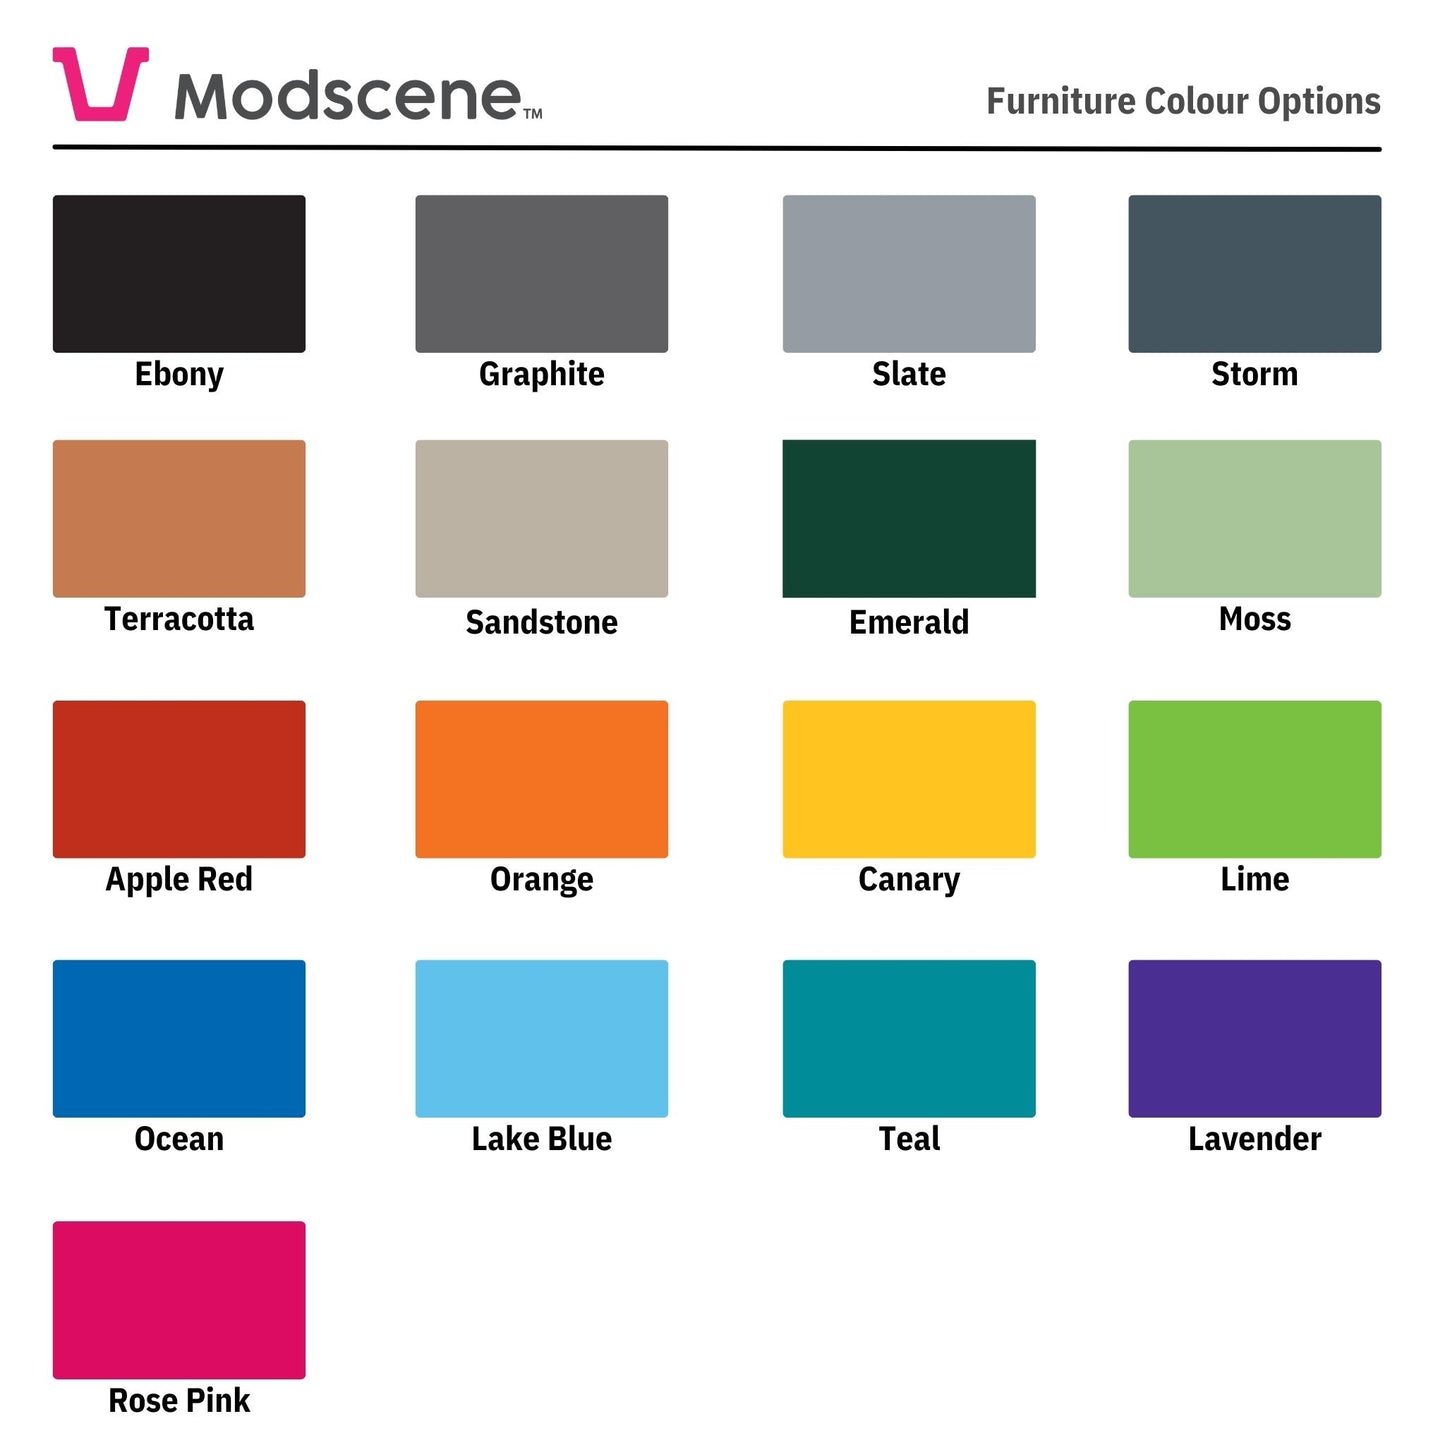 Modscene furniture colour chart. 